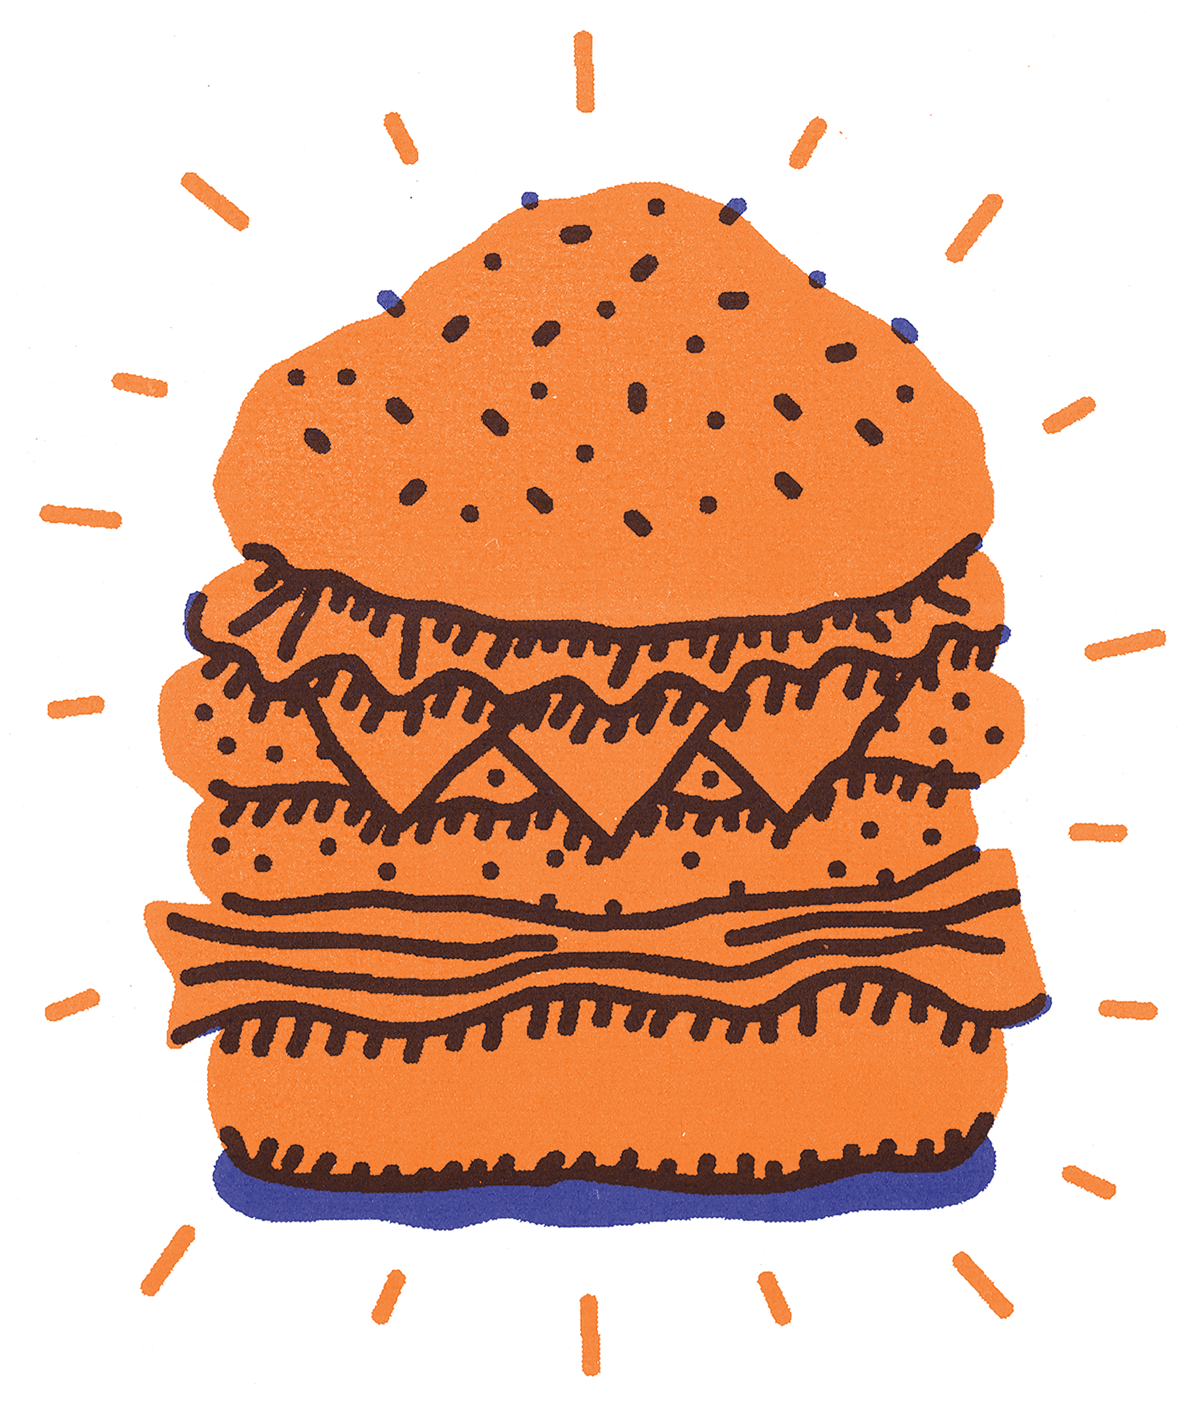 Food  texture barrelbody Coffee burger